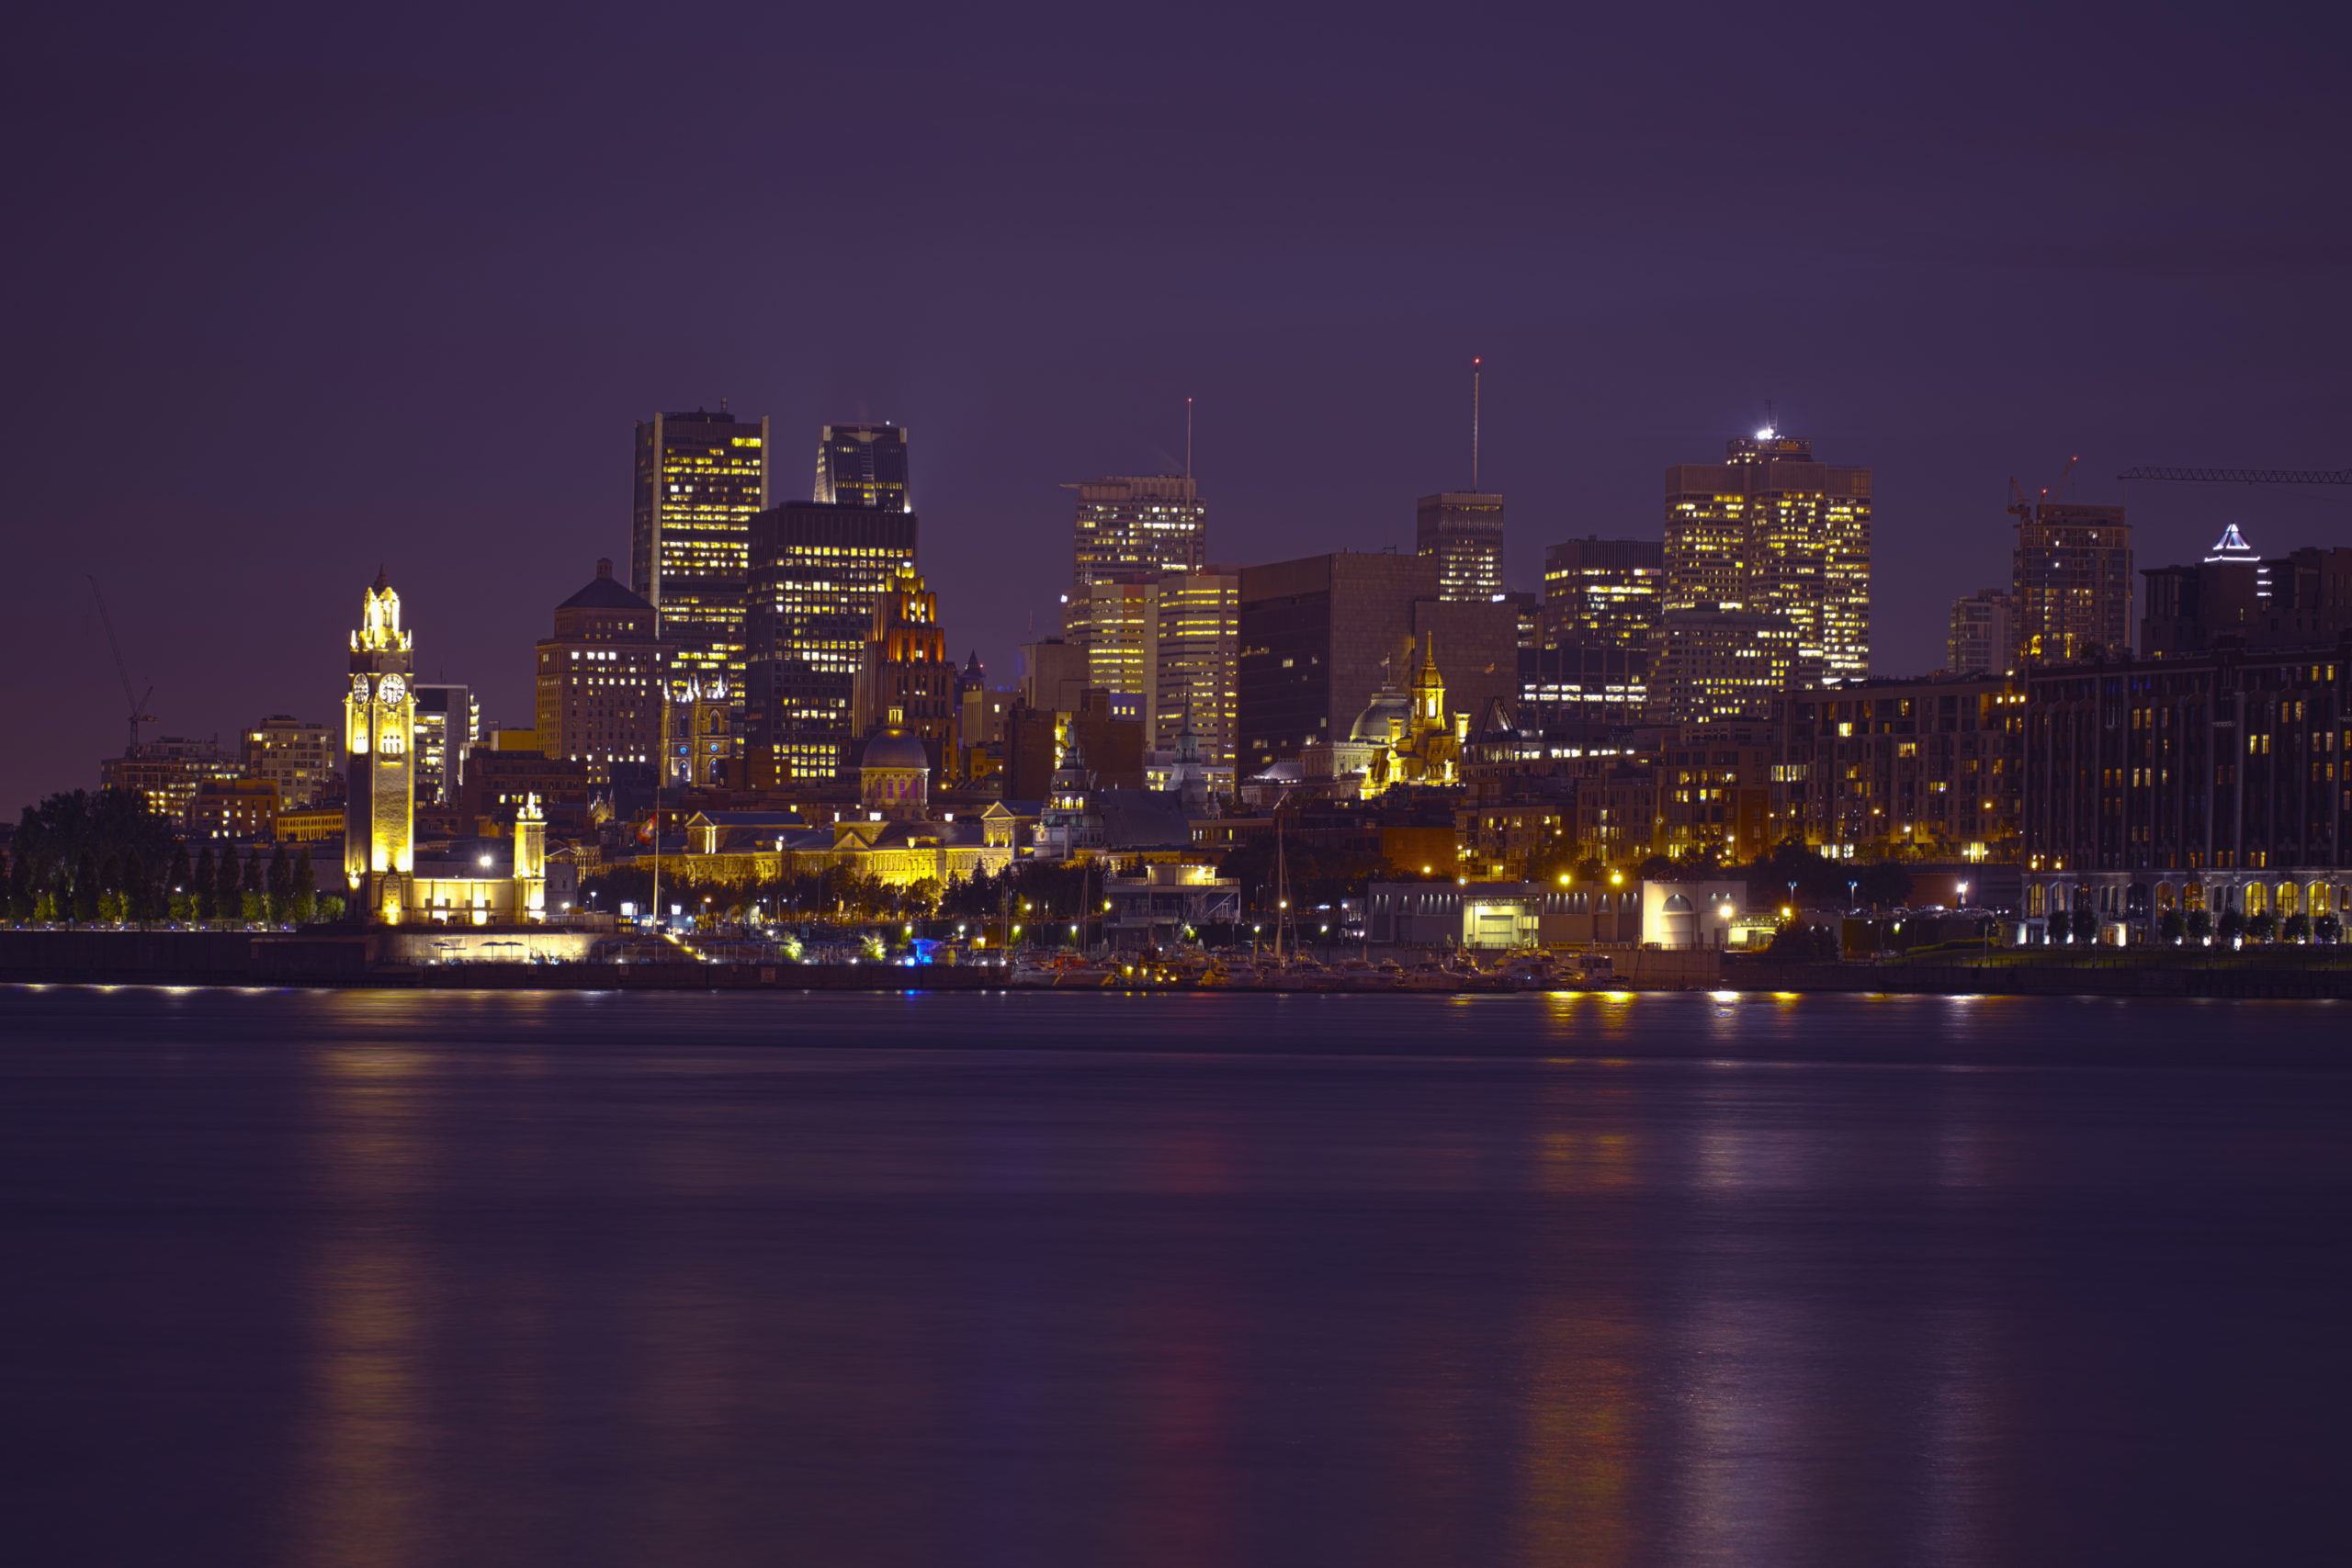 Montreal's city skyline at night.